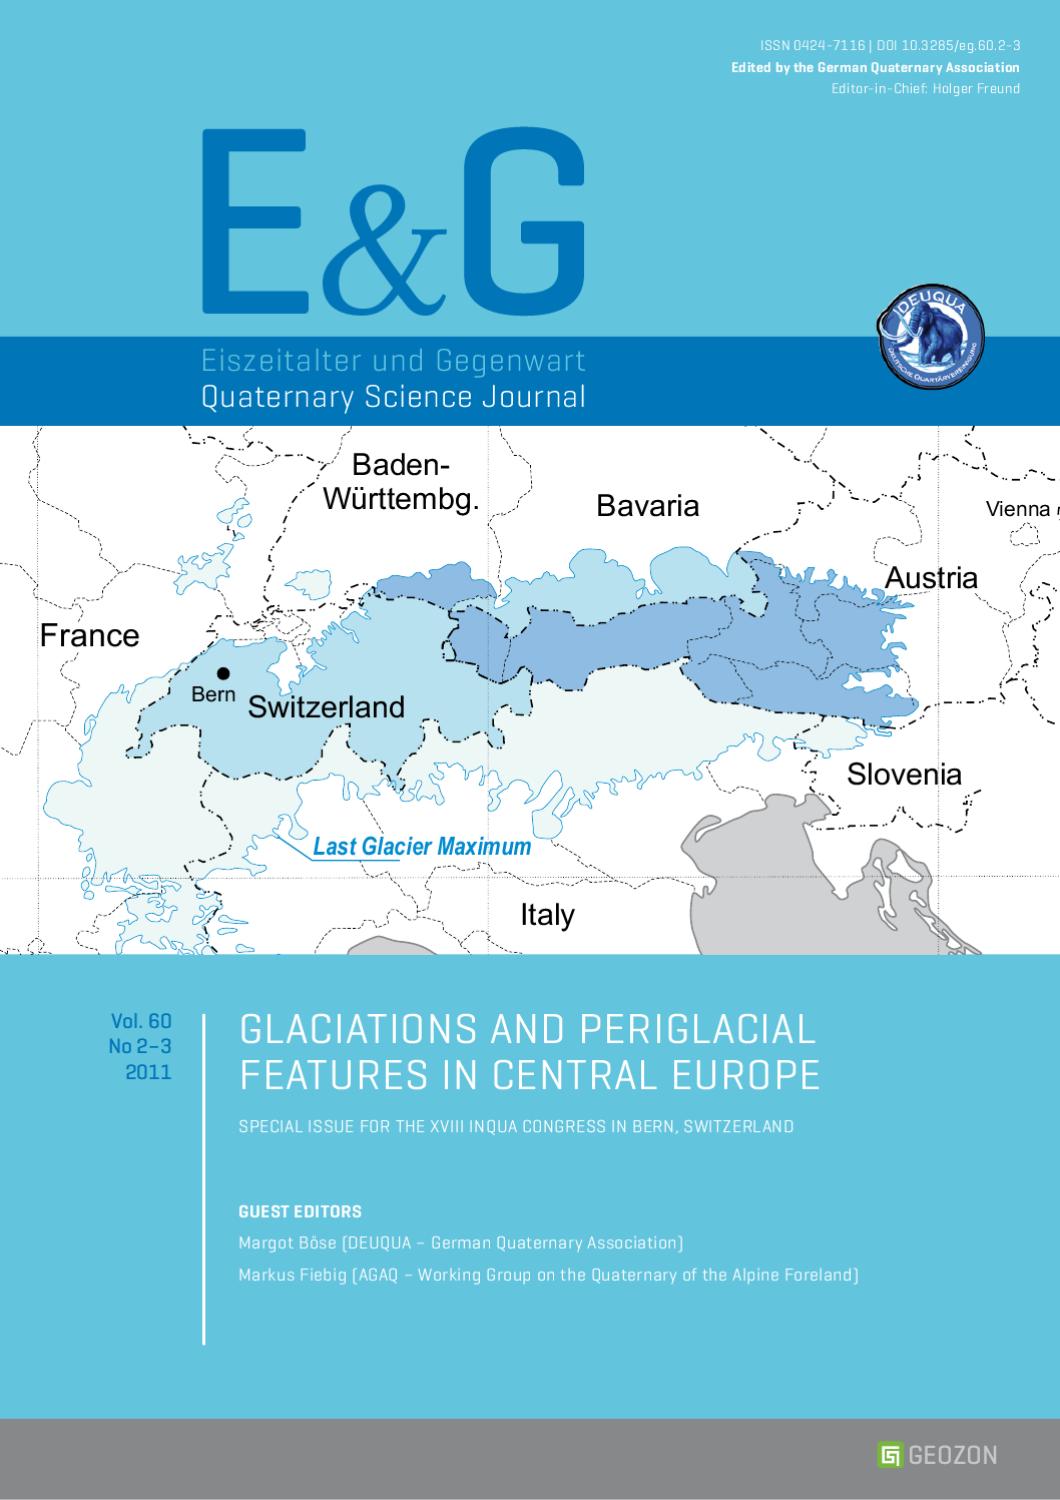 Tunnel Englischer Garten Frisch E&g – Quaternary Science Journal Vol 60 No 2 3 by Geozon